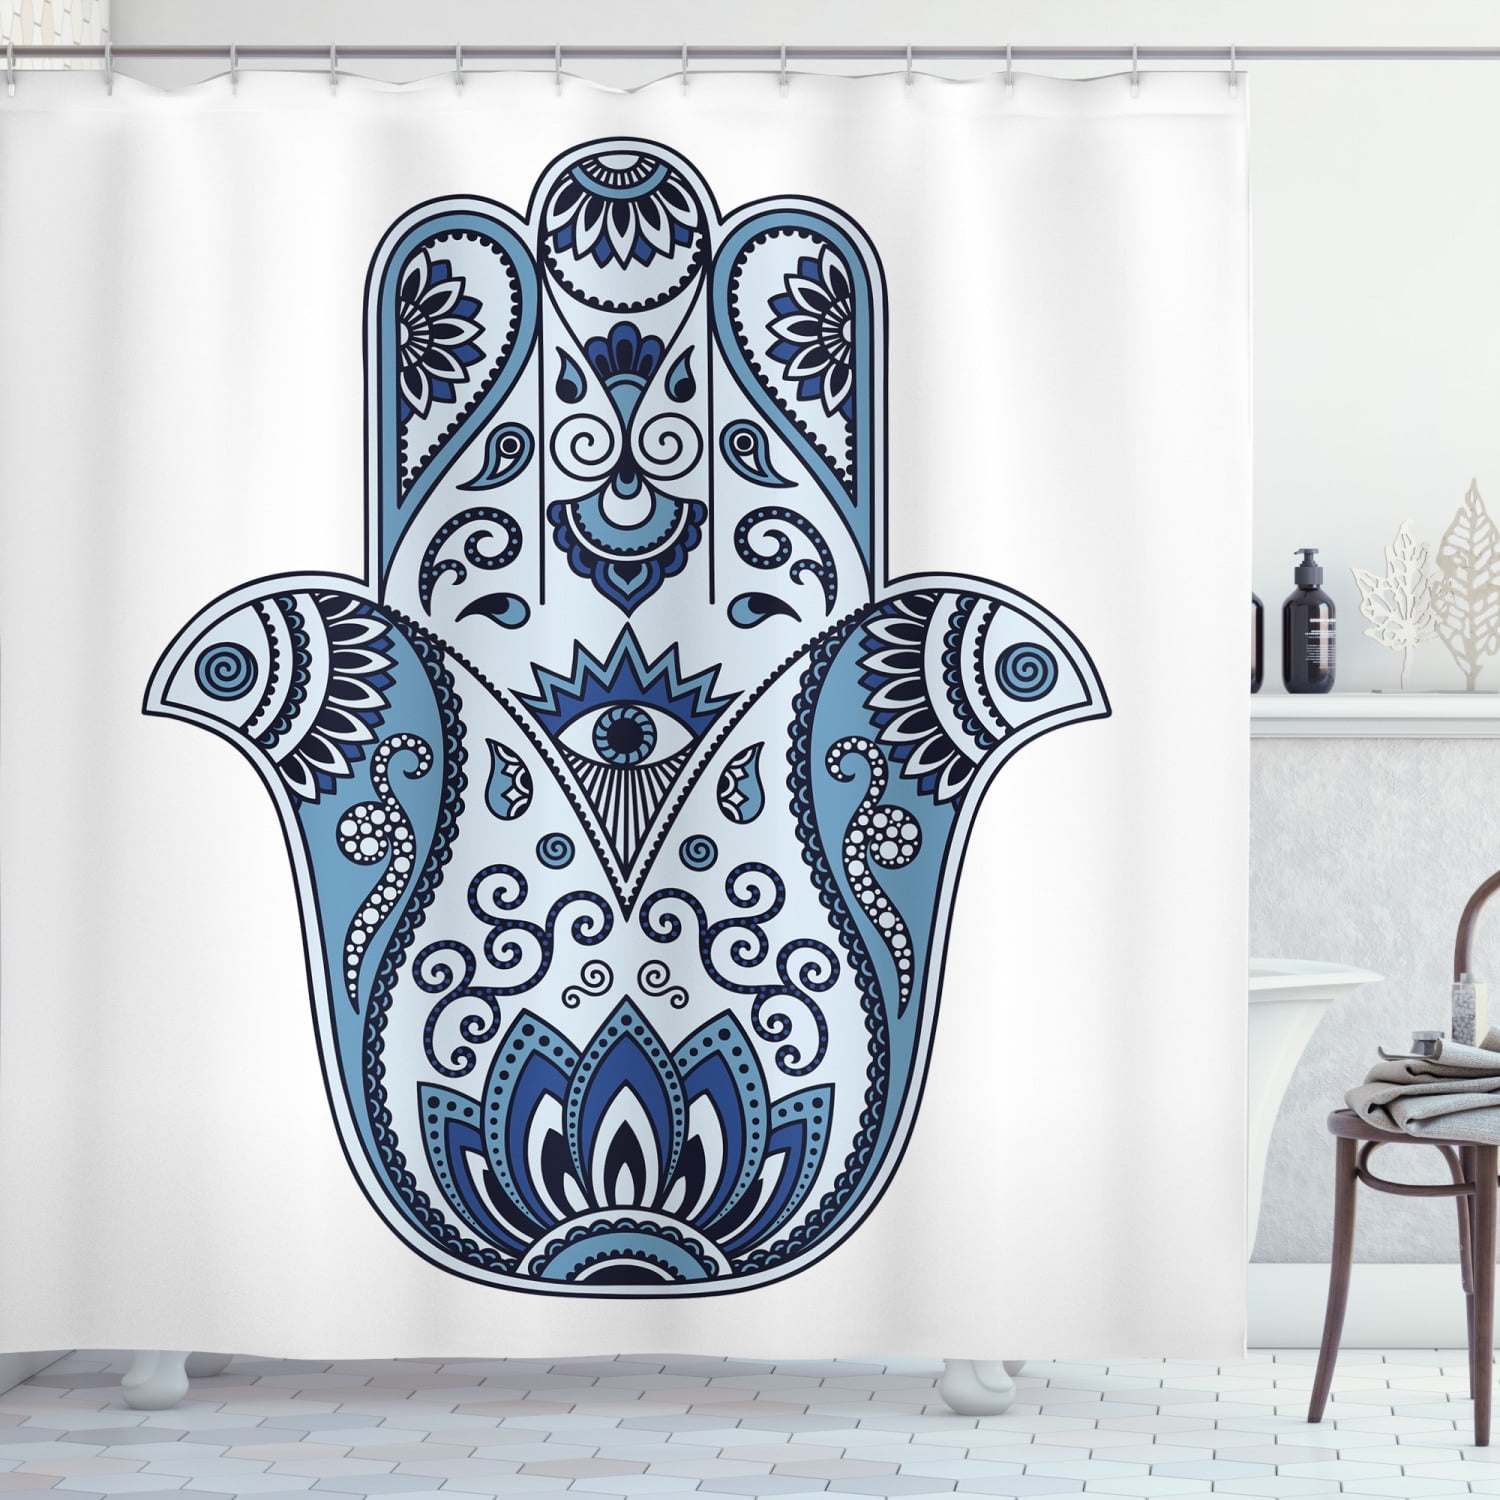 72x72'' Silver snows star Shower Curtain Bathroom Waterproof Fabric & Mat 4687 